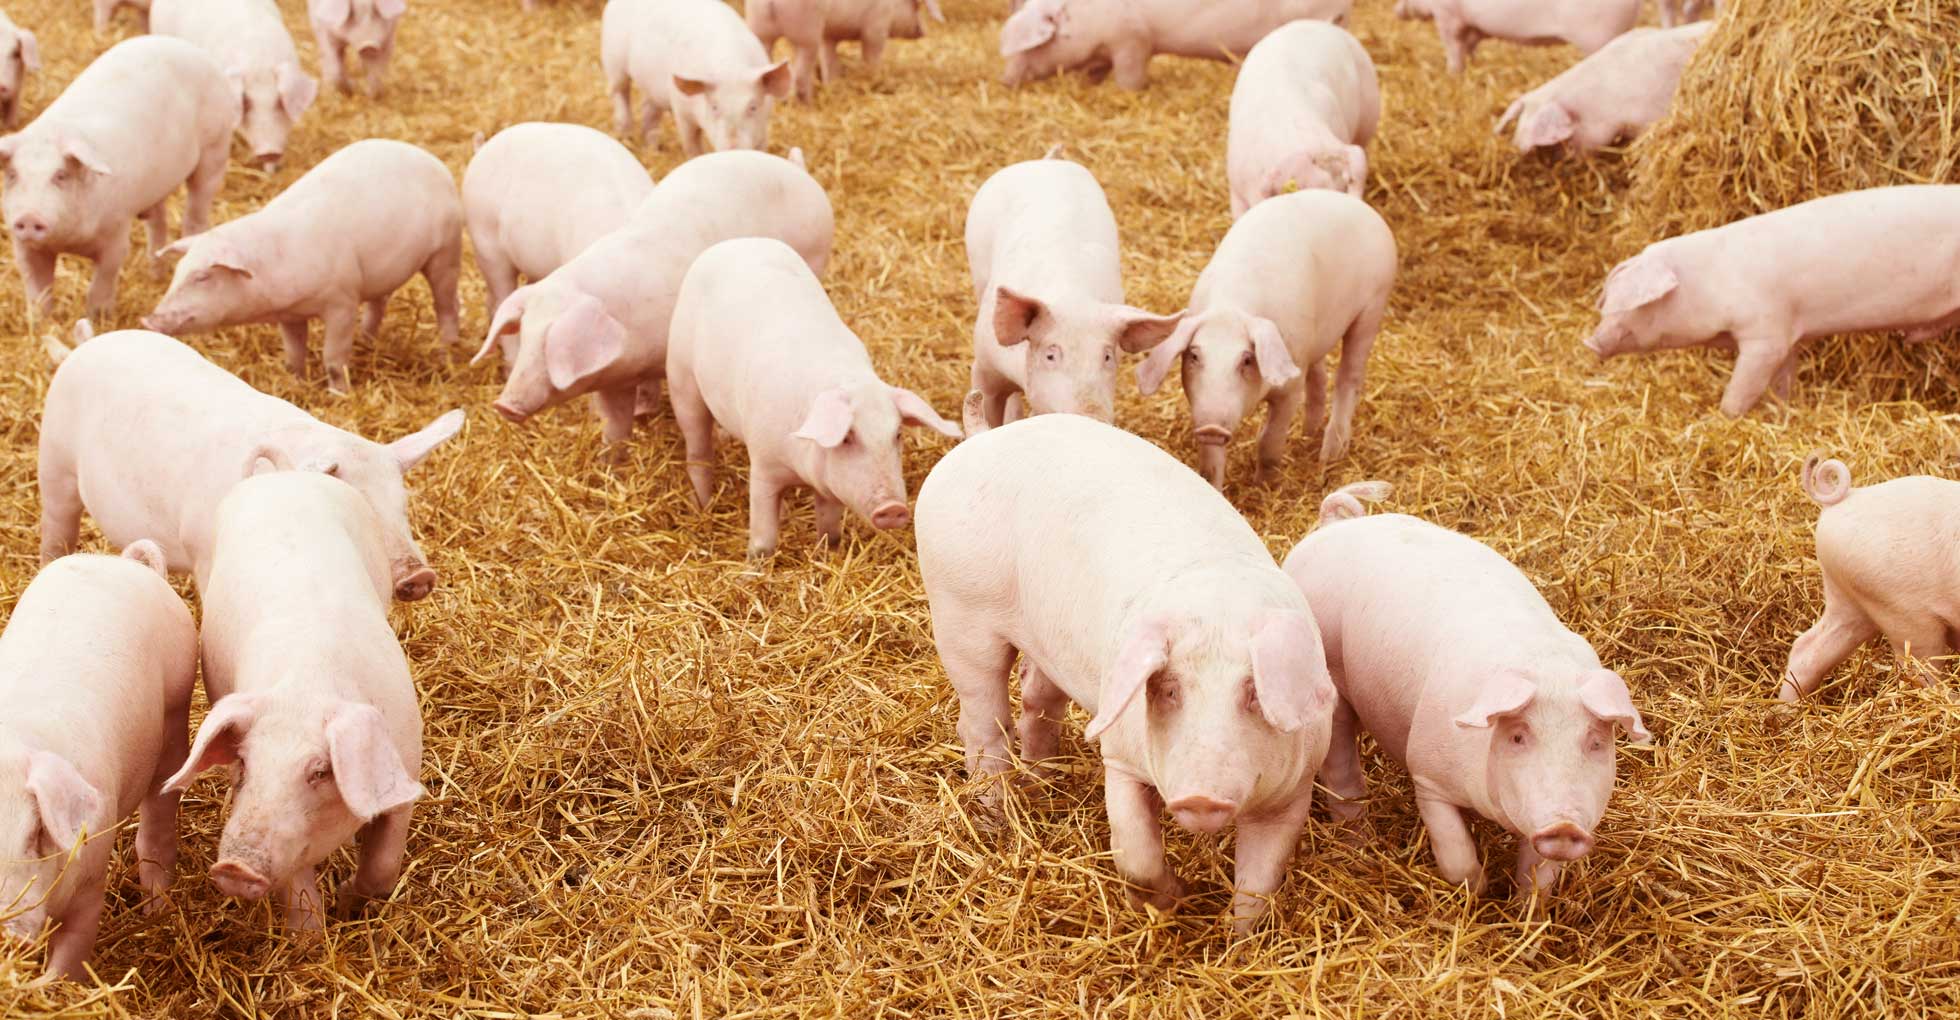 free range pigs on farm